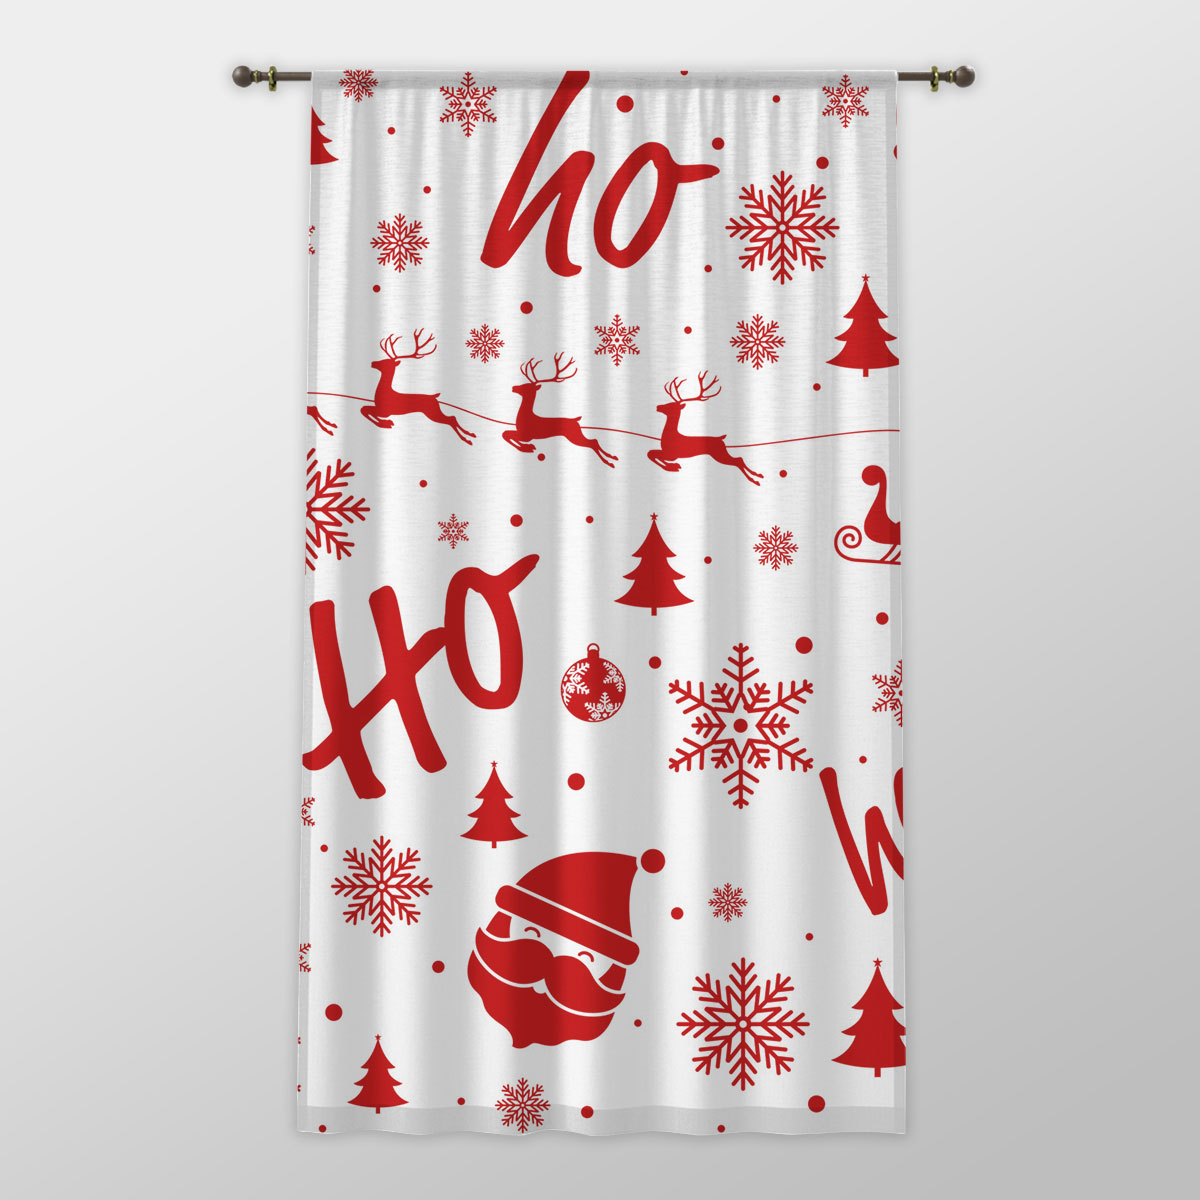 Santa Claus, Santas Reindeer And Christmas Sleigh On The Snowflake Background One-side Printed Window Curtain